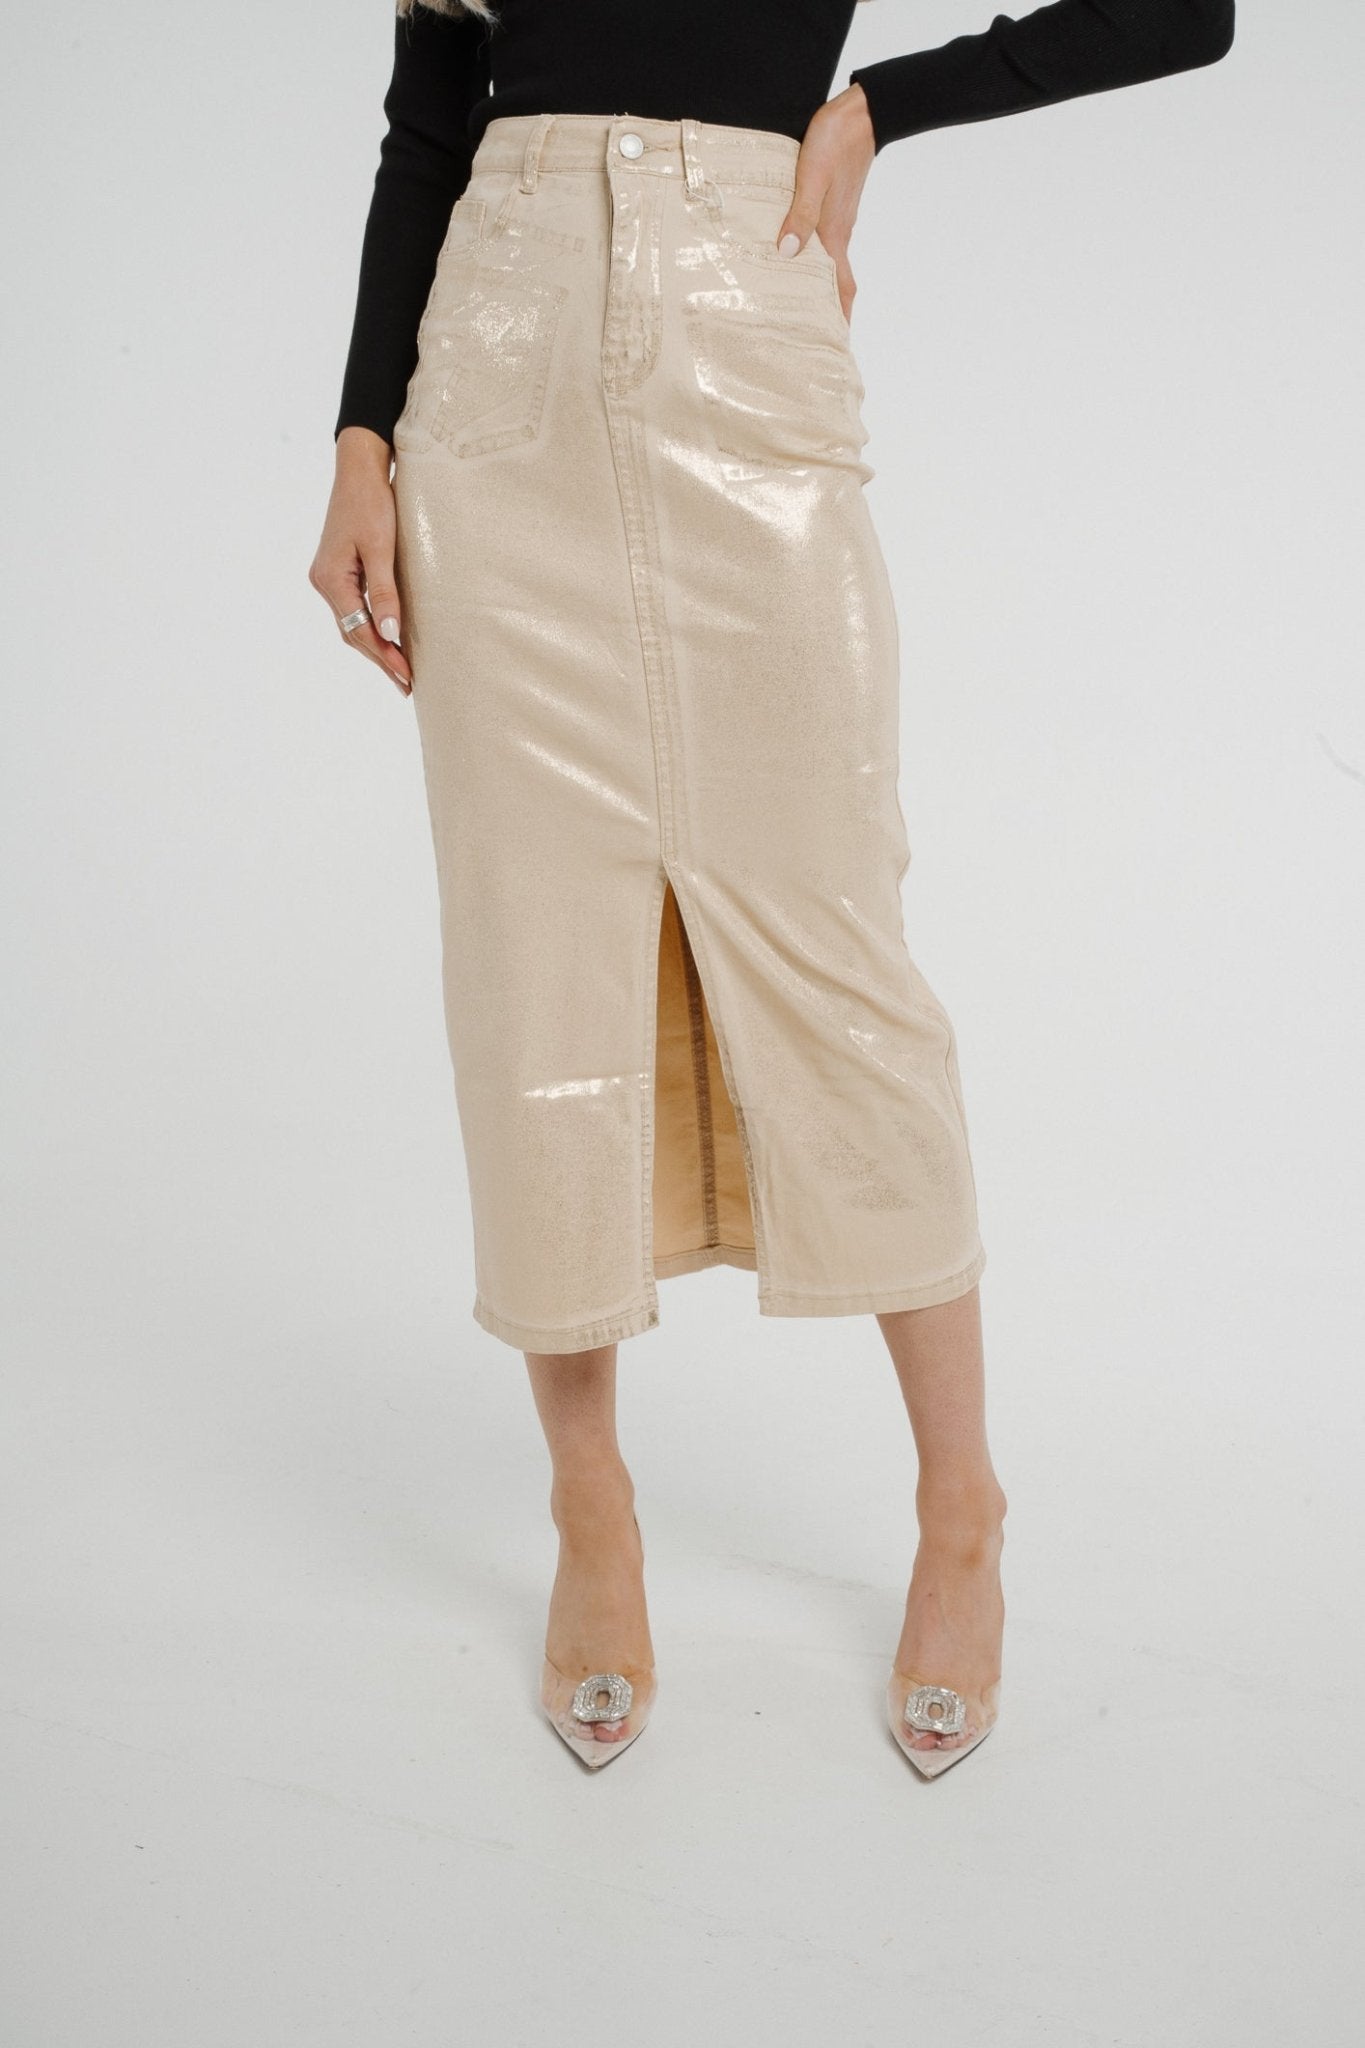 Polly Metallic Denim Skirt In Gold - The Walk in Wardrobe